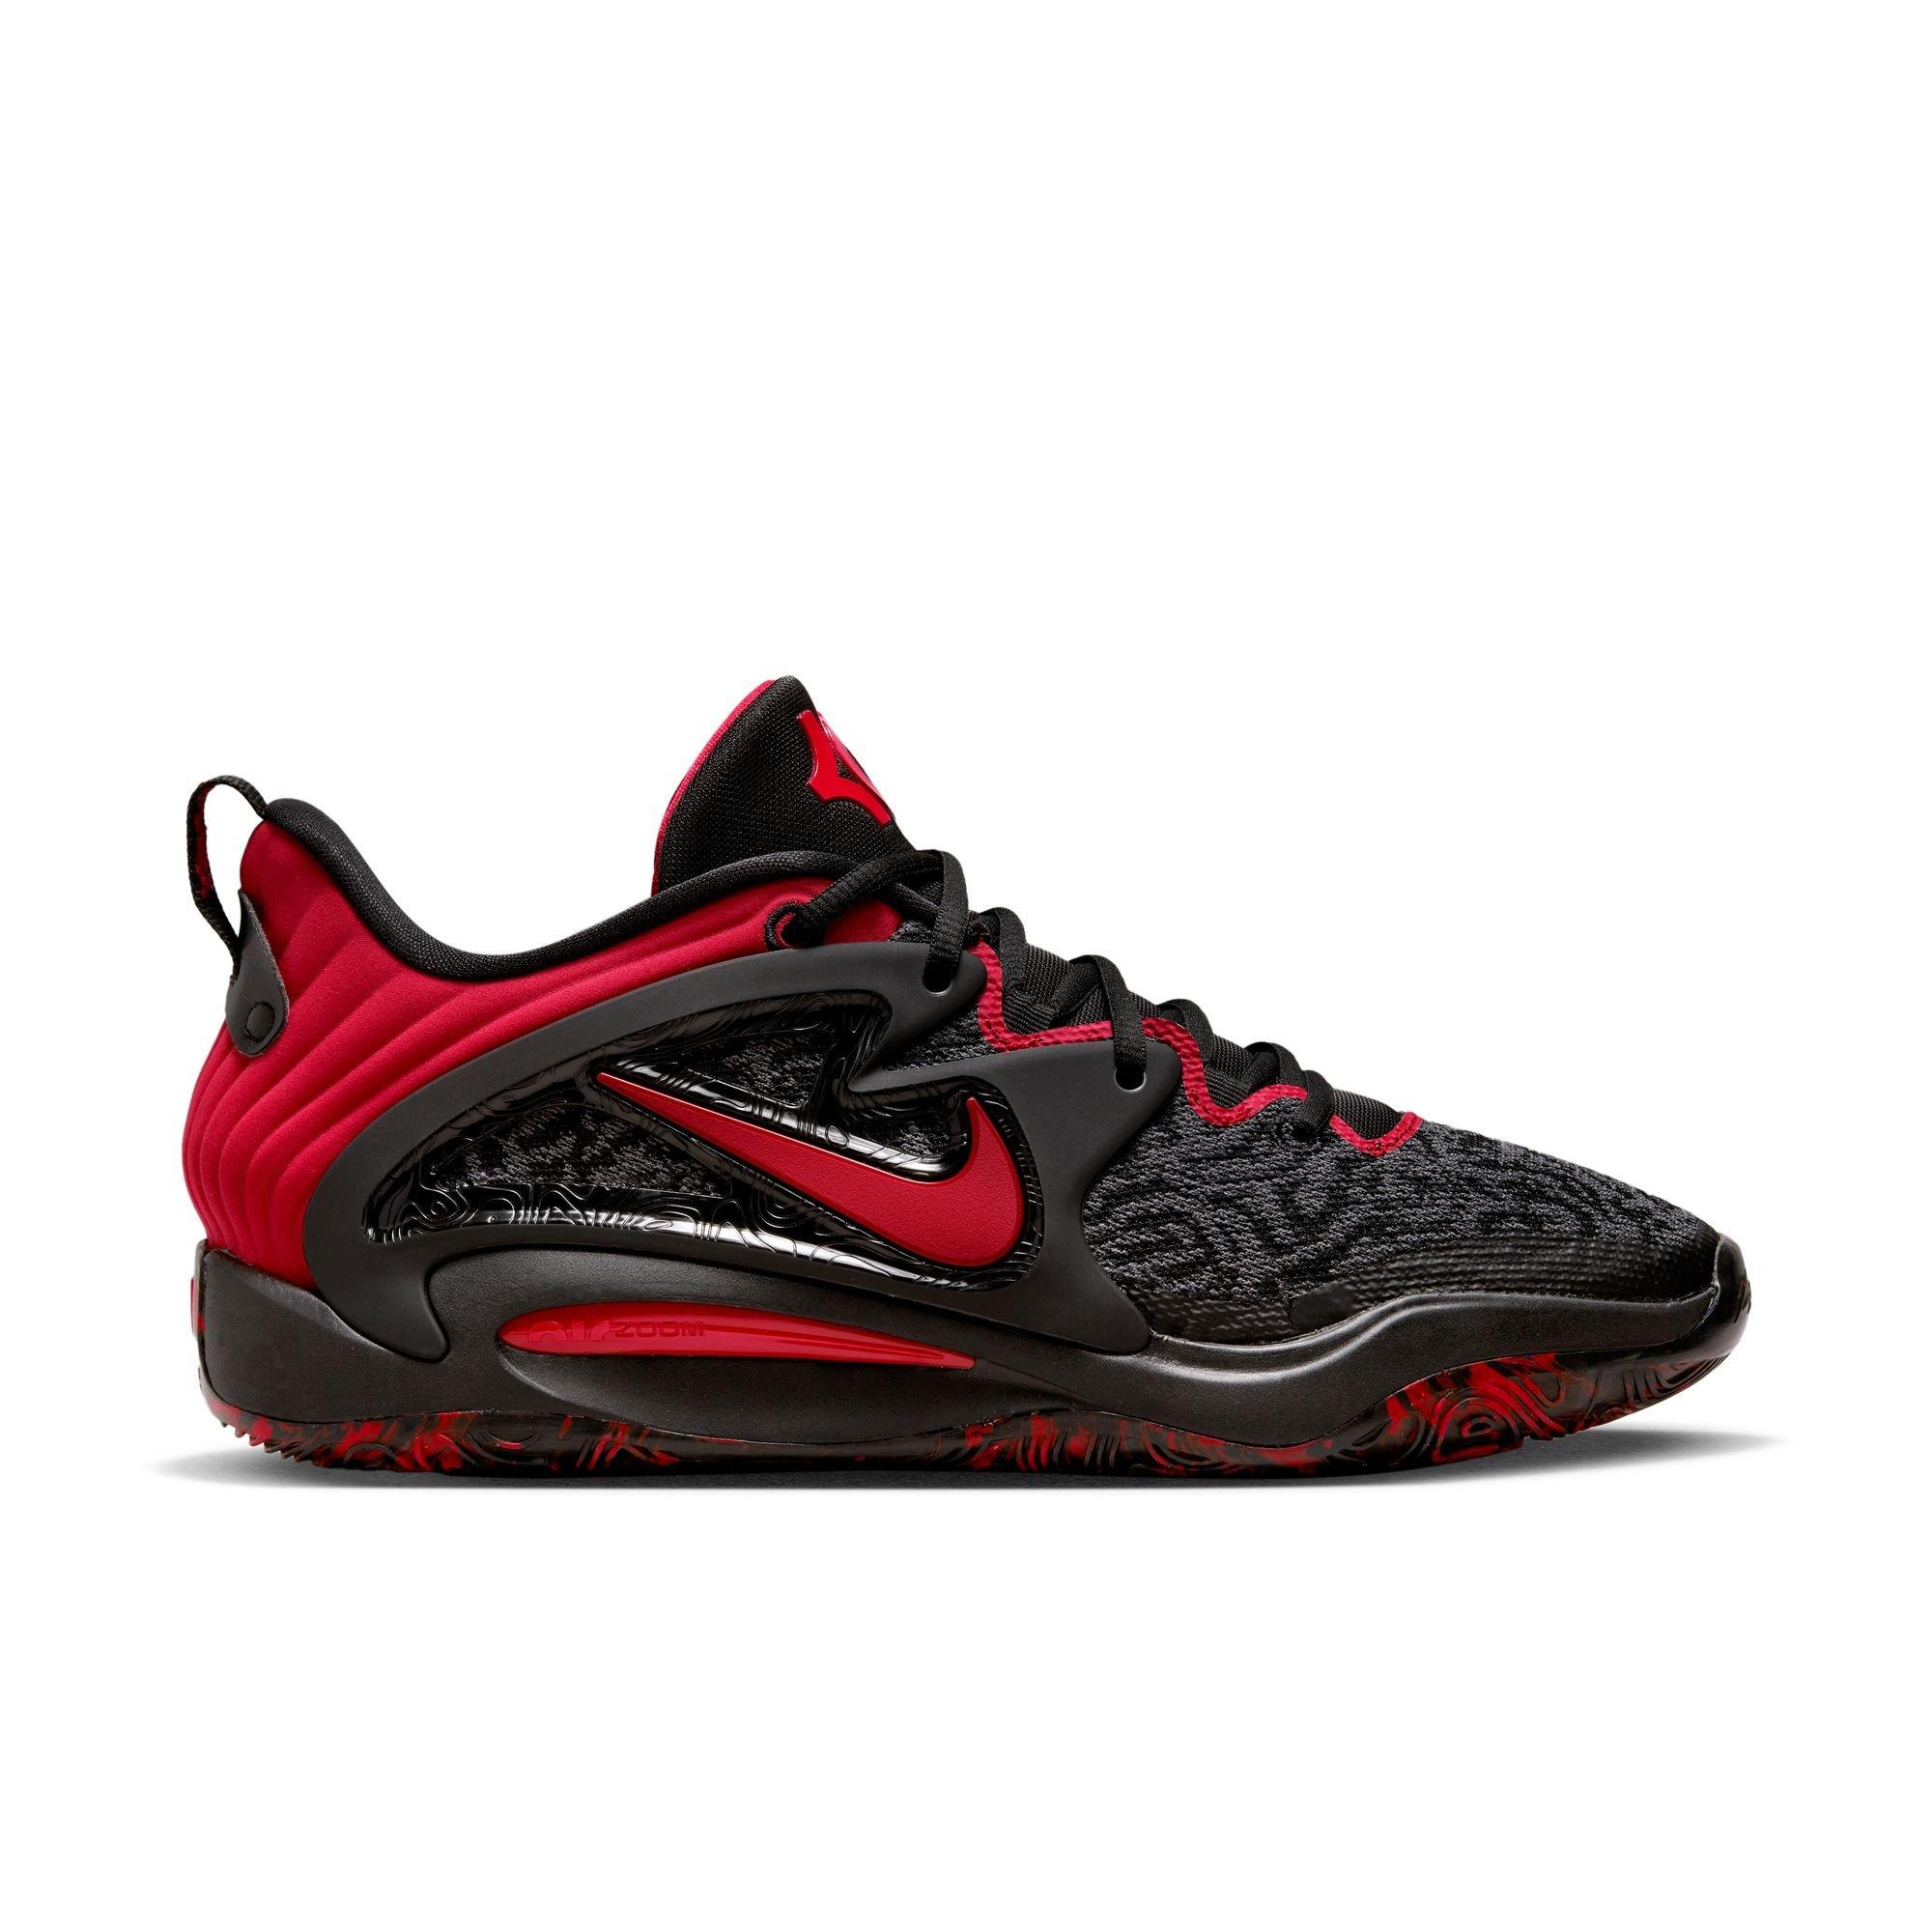 Oferta de trabajo sangrado Influencia Nike KD15 "Black/University Red/Light Crimson" Men's Basketball Shoe